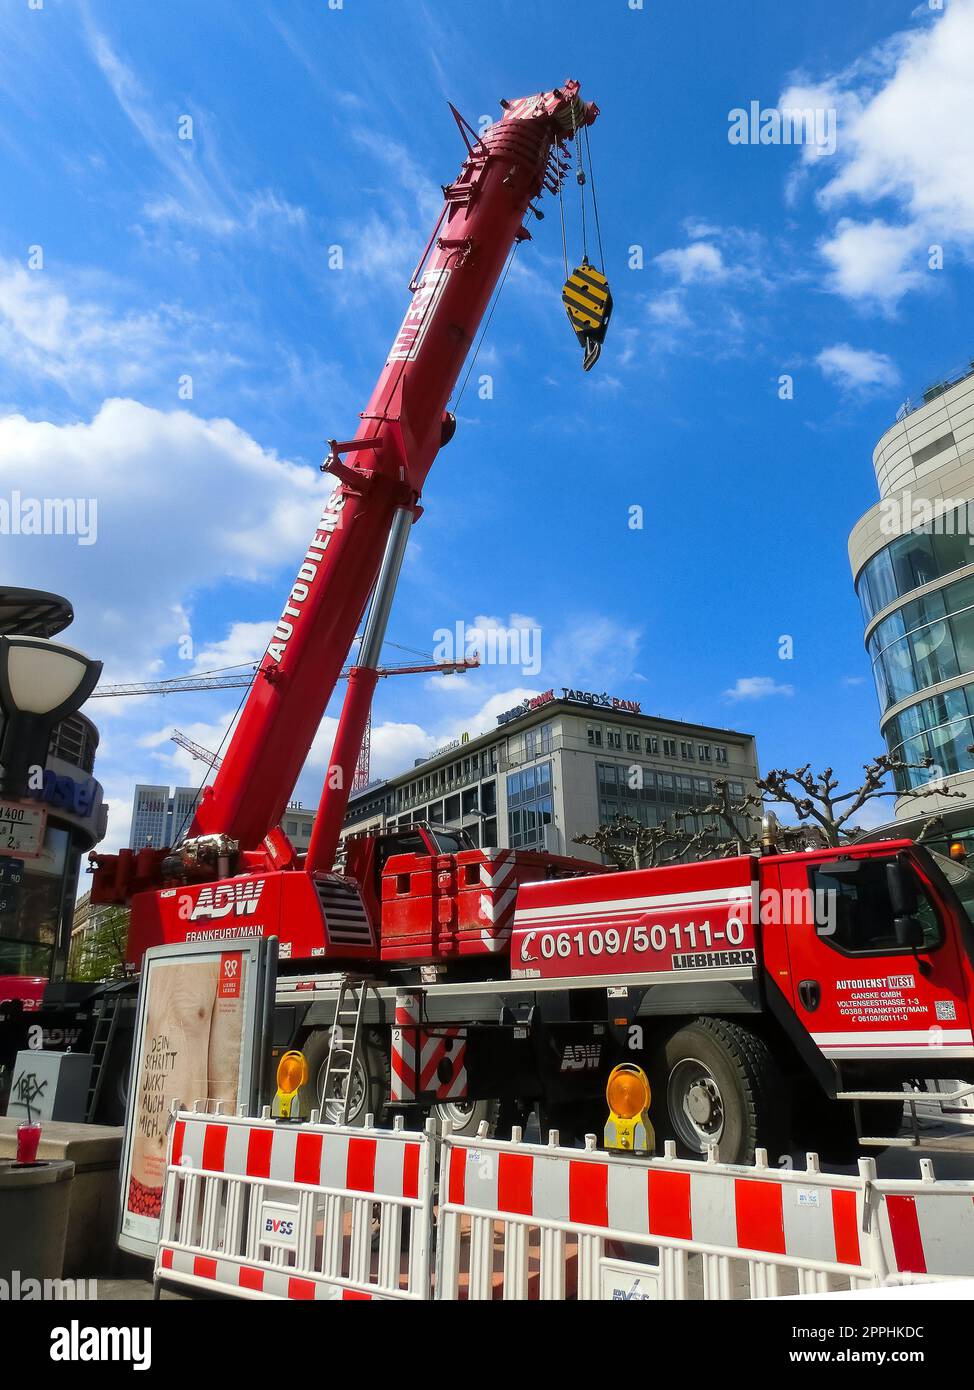 Liebherr mobile crane works on the street Stock Photo